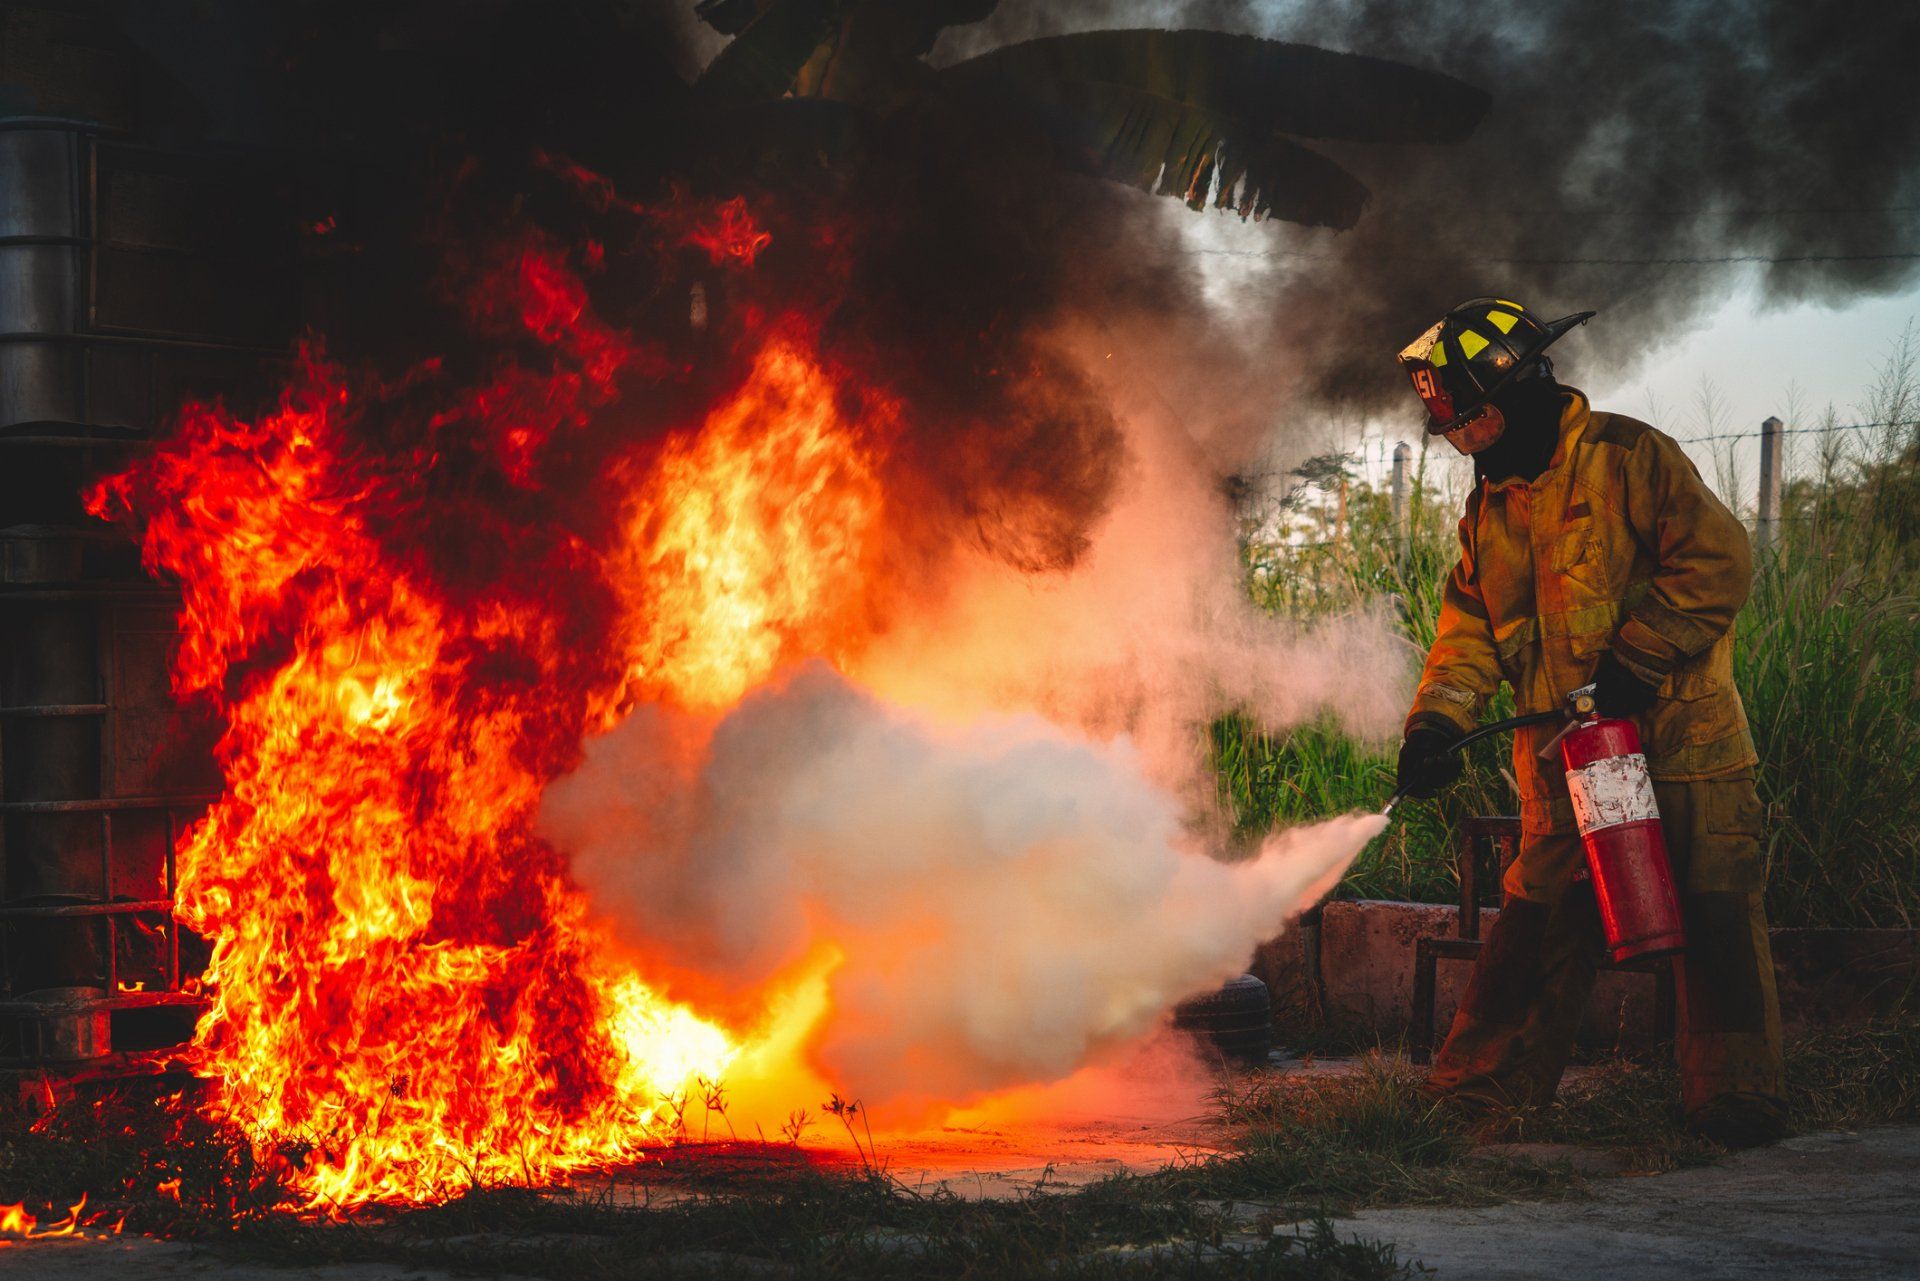 Fire Man Using Fire Extinguisher - Jonesboro, AR - Fire Protection Of Arkansas, Inc.